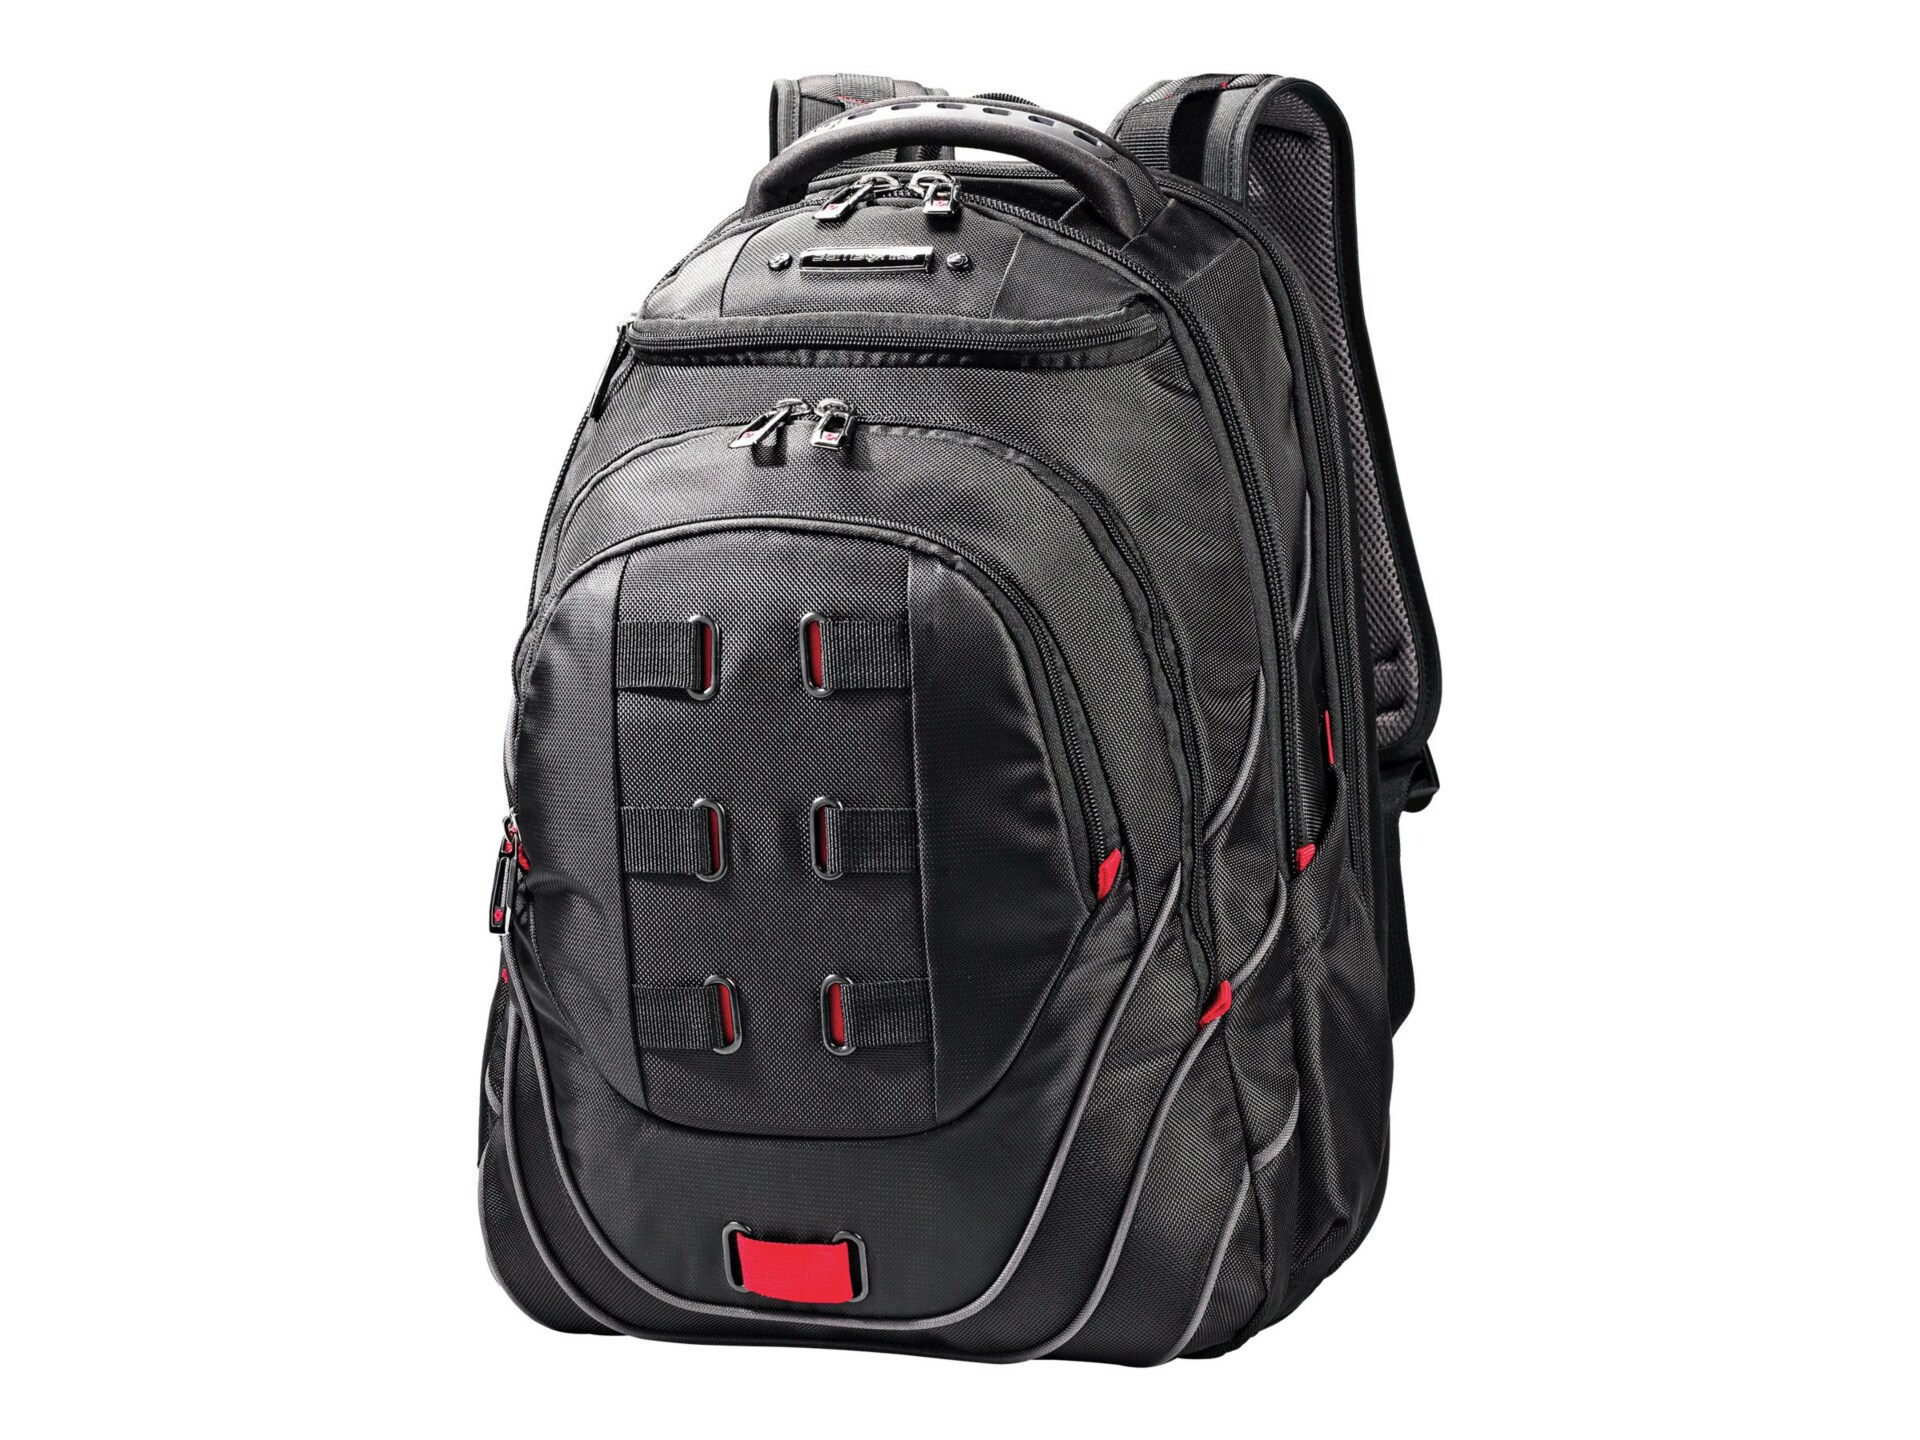 Apollo Walker Backpack Canvas Gray Multi-Pocket Comfortable